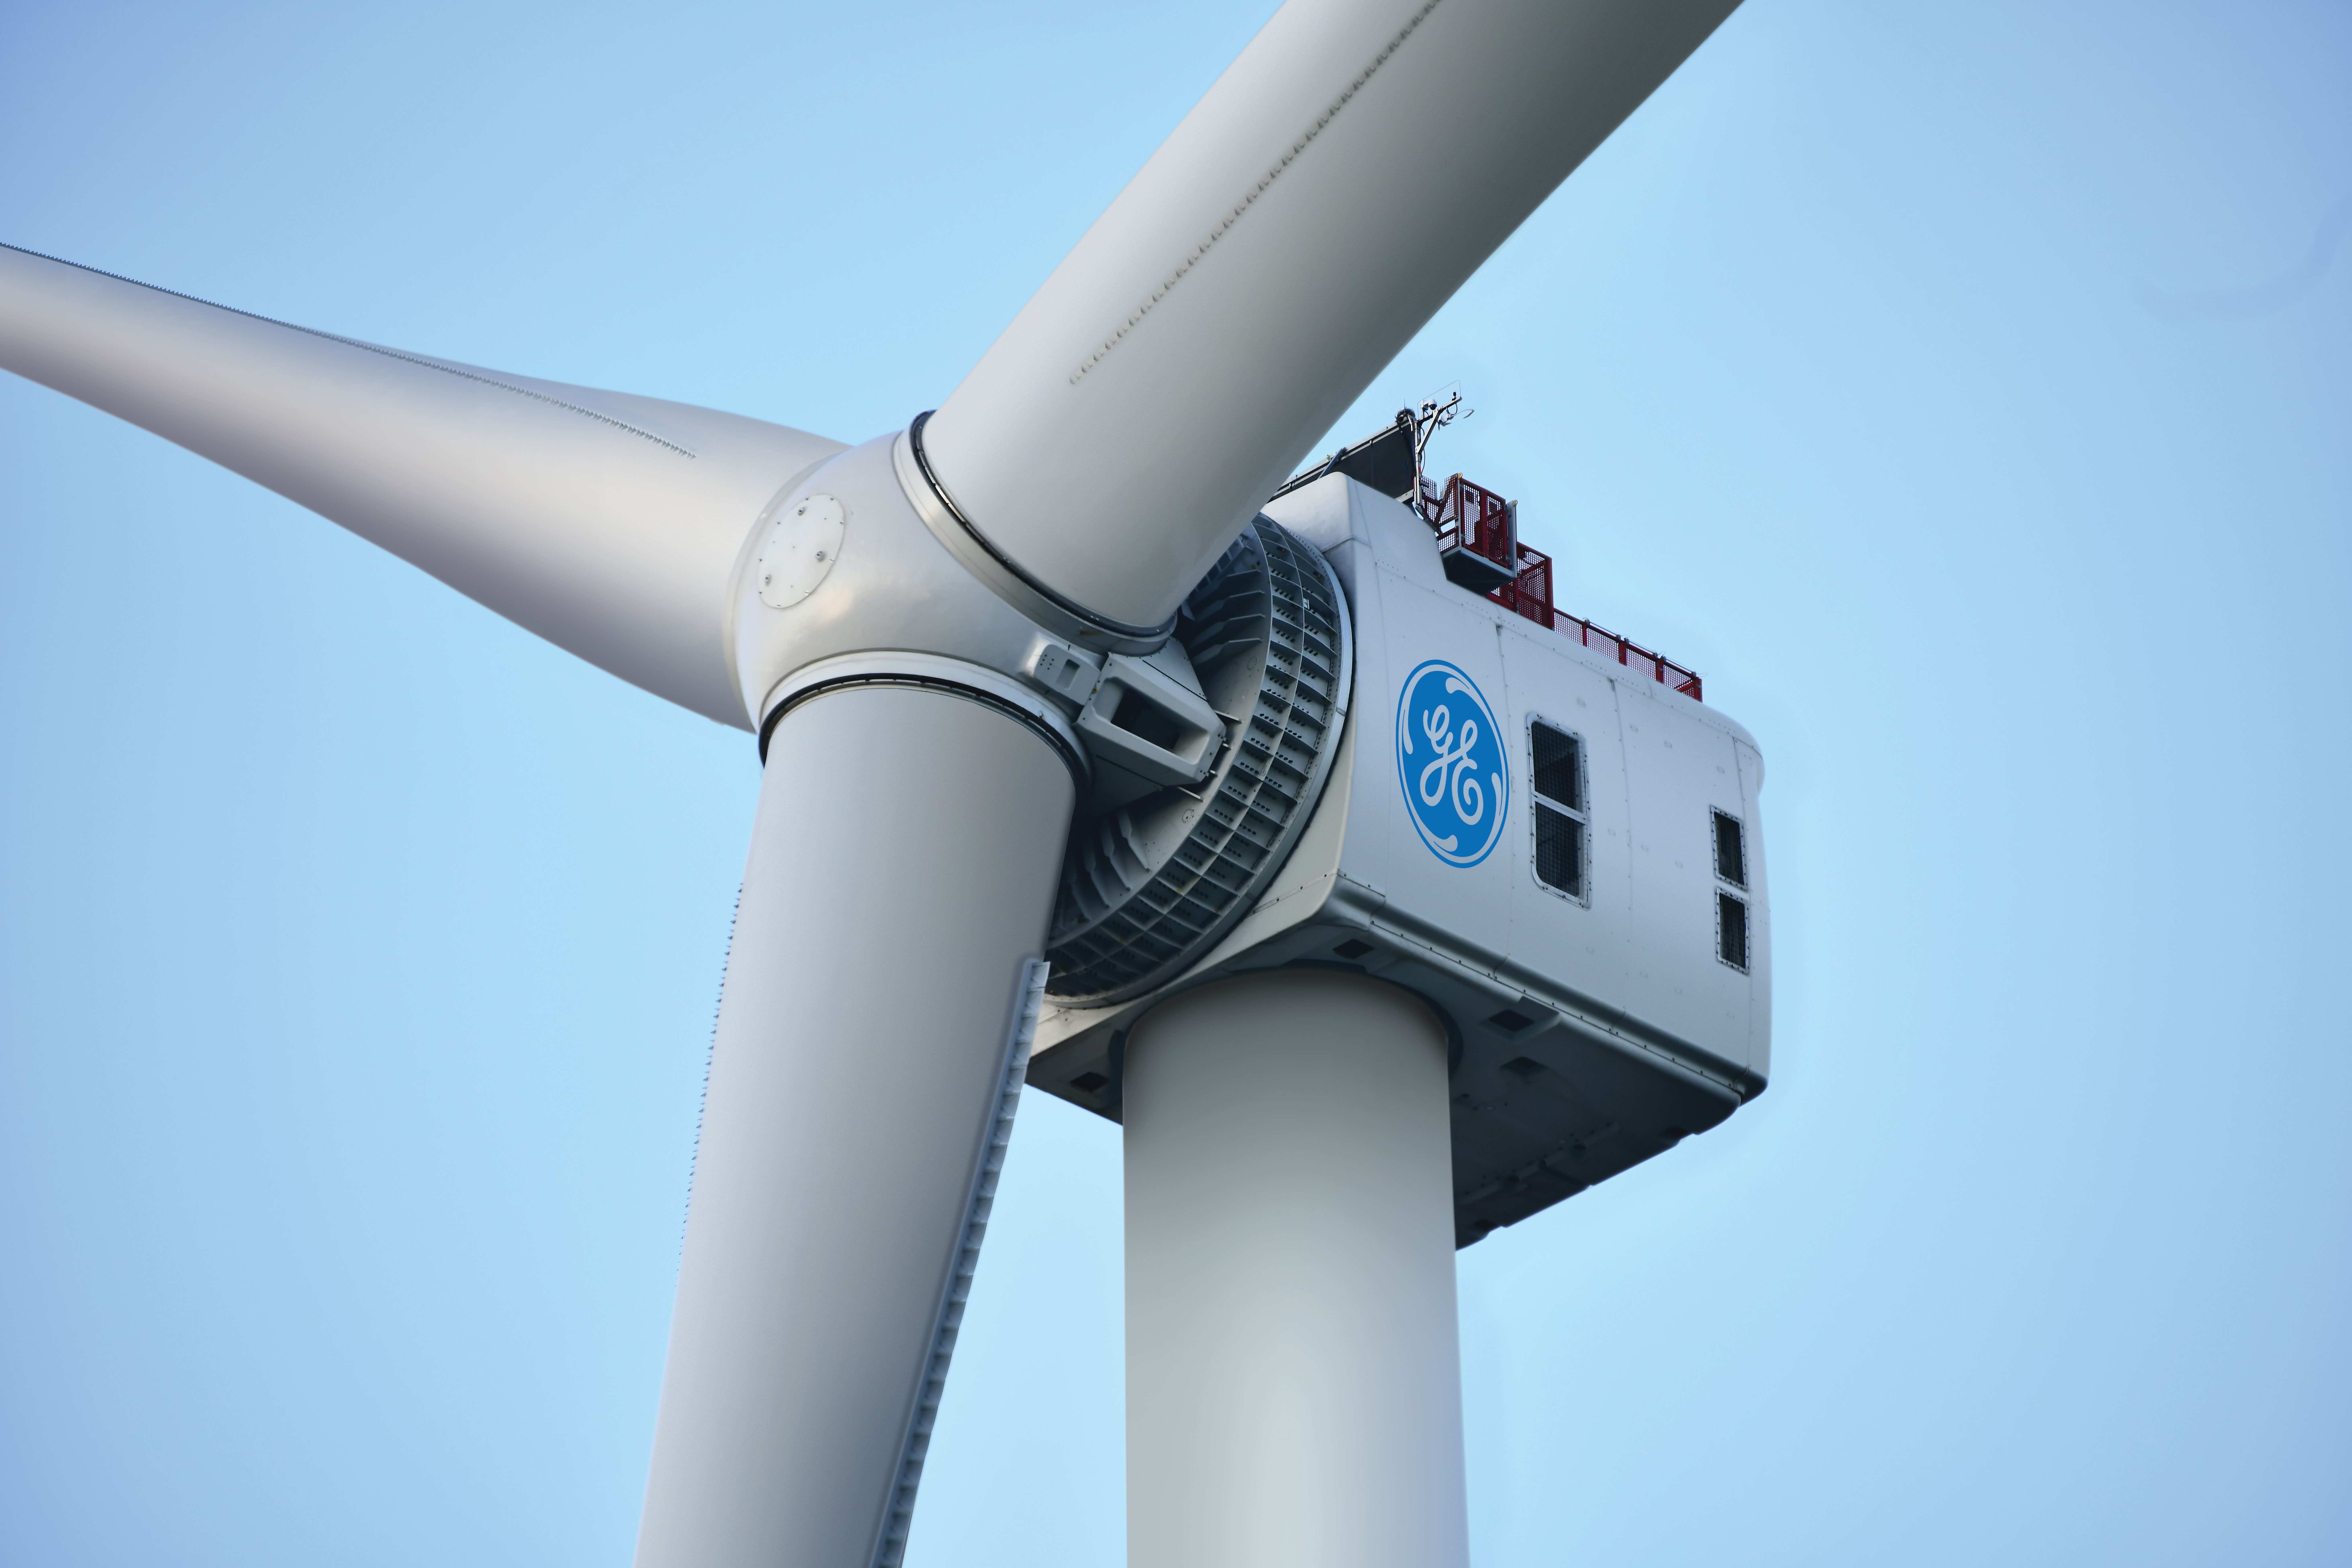 GE Haliade-X wind turbine, rotor in focus